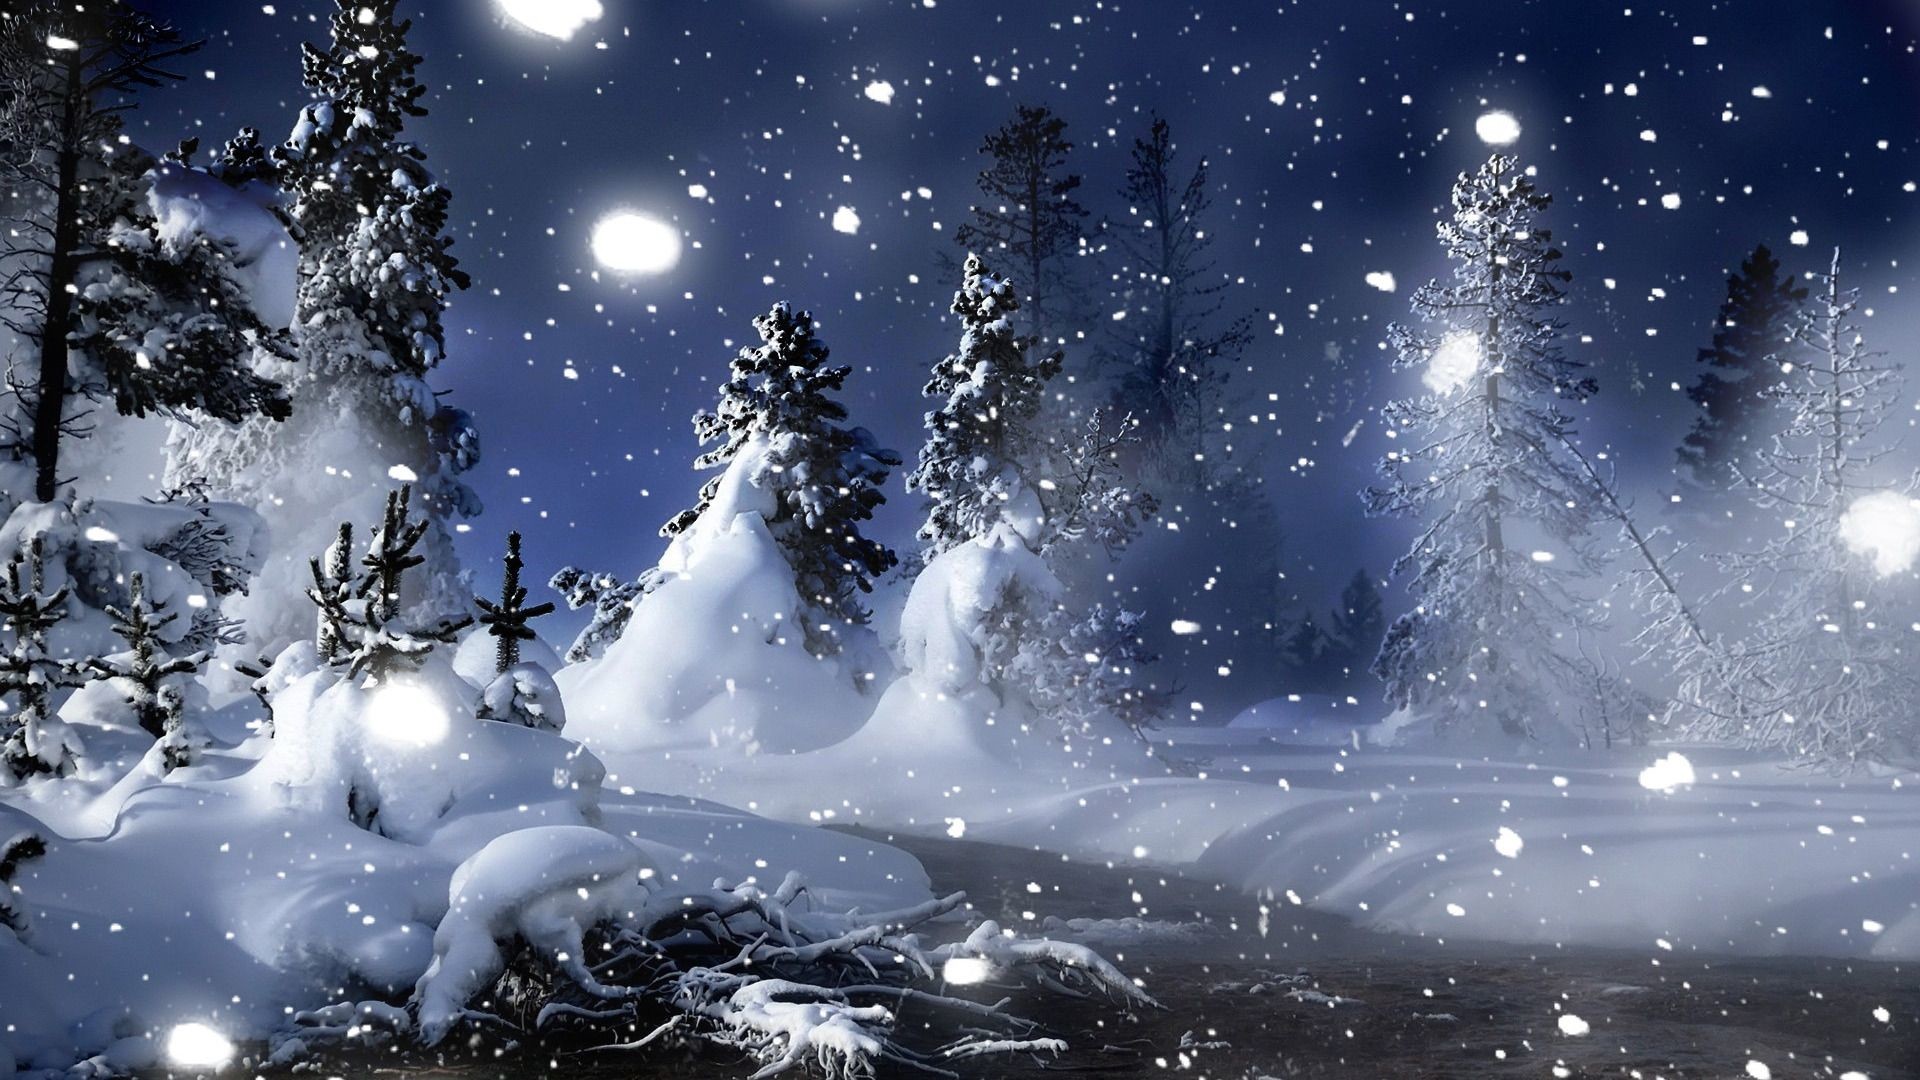 Winter Snow – Wallpaper, High Definition, High Quality, Widescreen